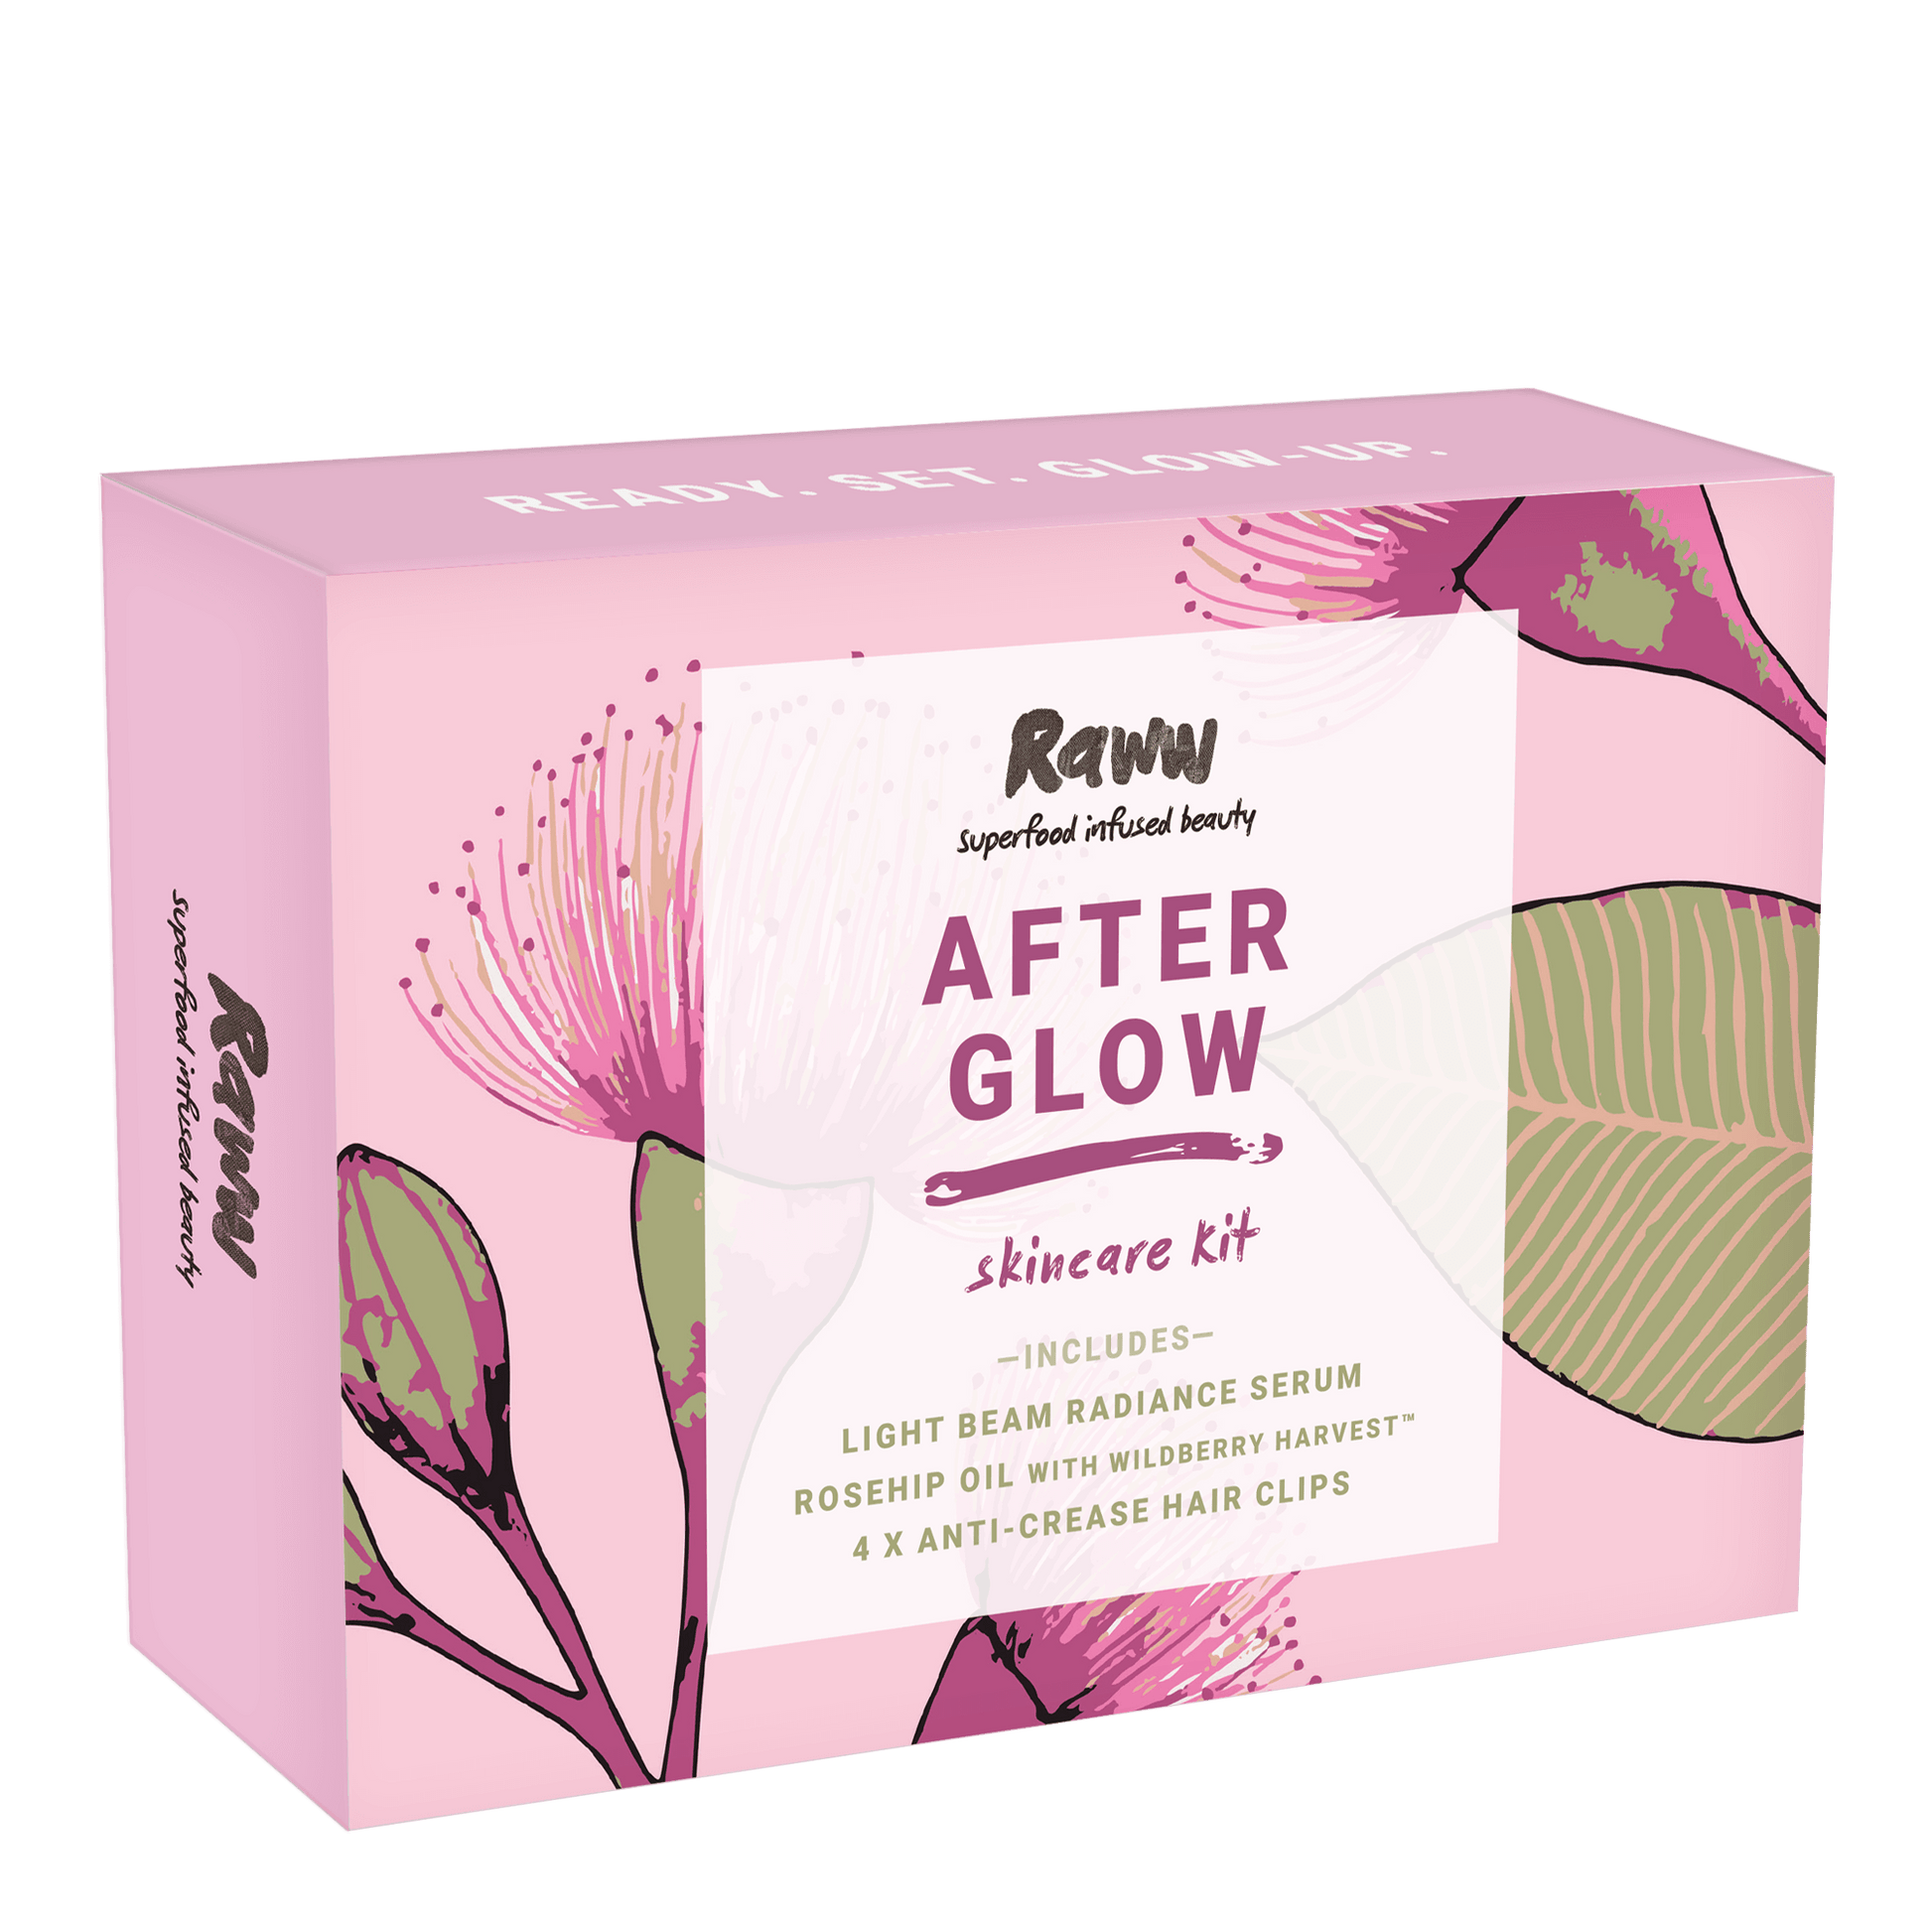 After Glow Skincare Kit | RAWW Cosmetics | 02